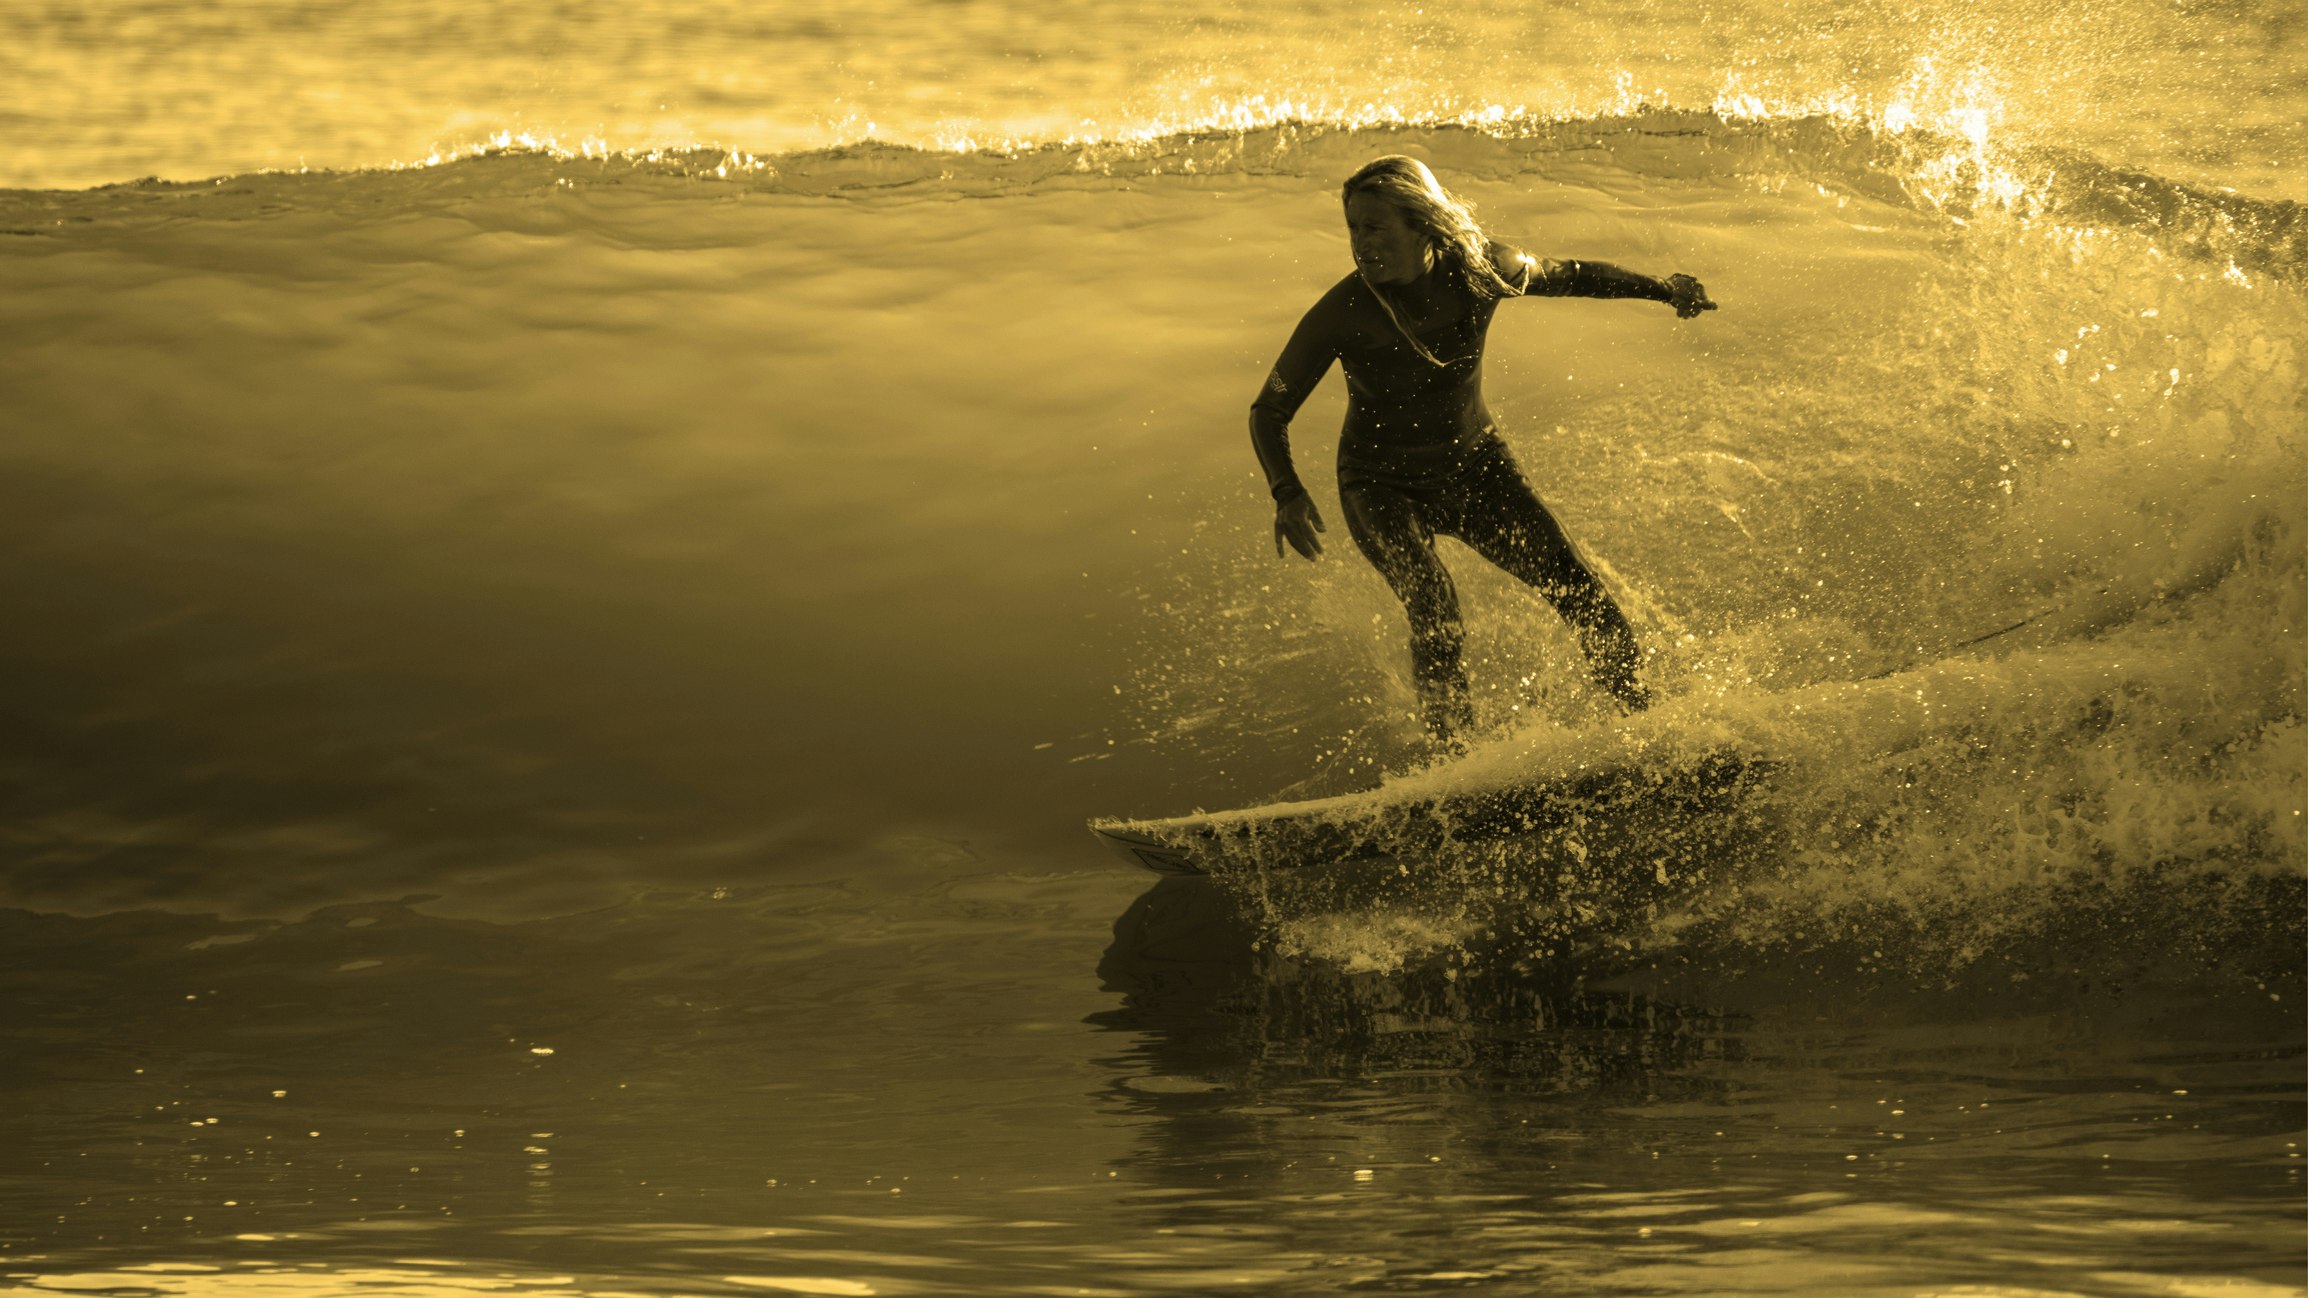 A surfer rides an ocean wave at sunset